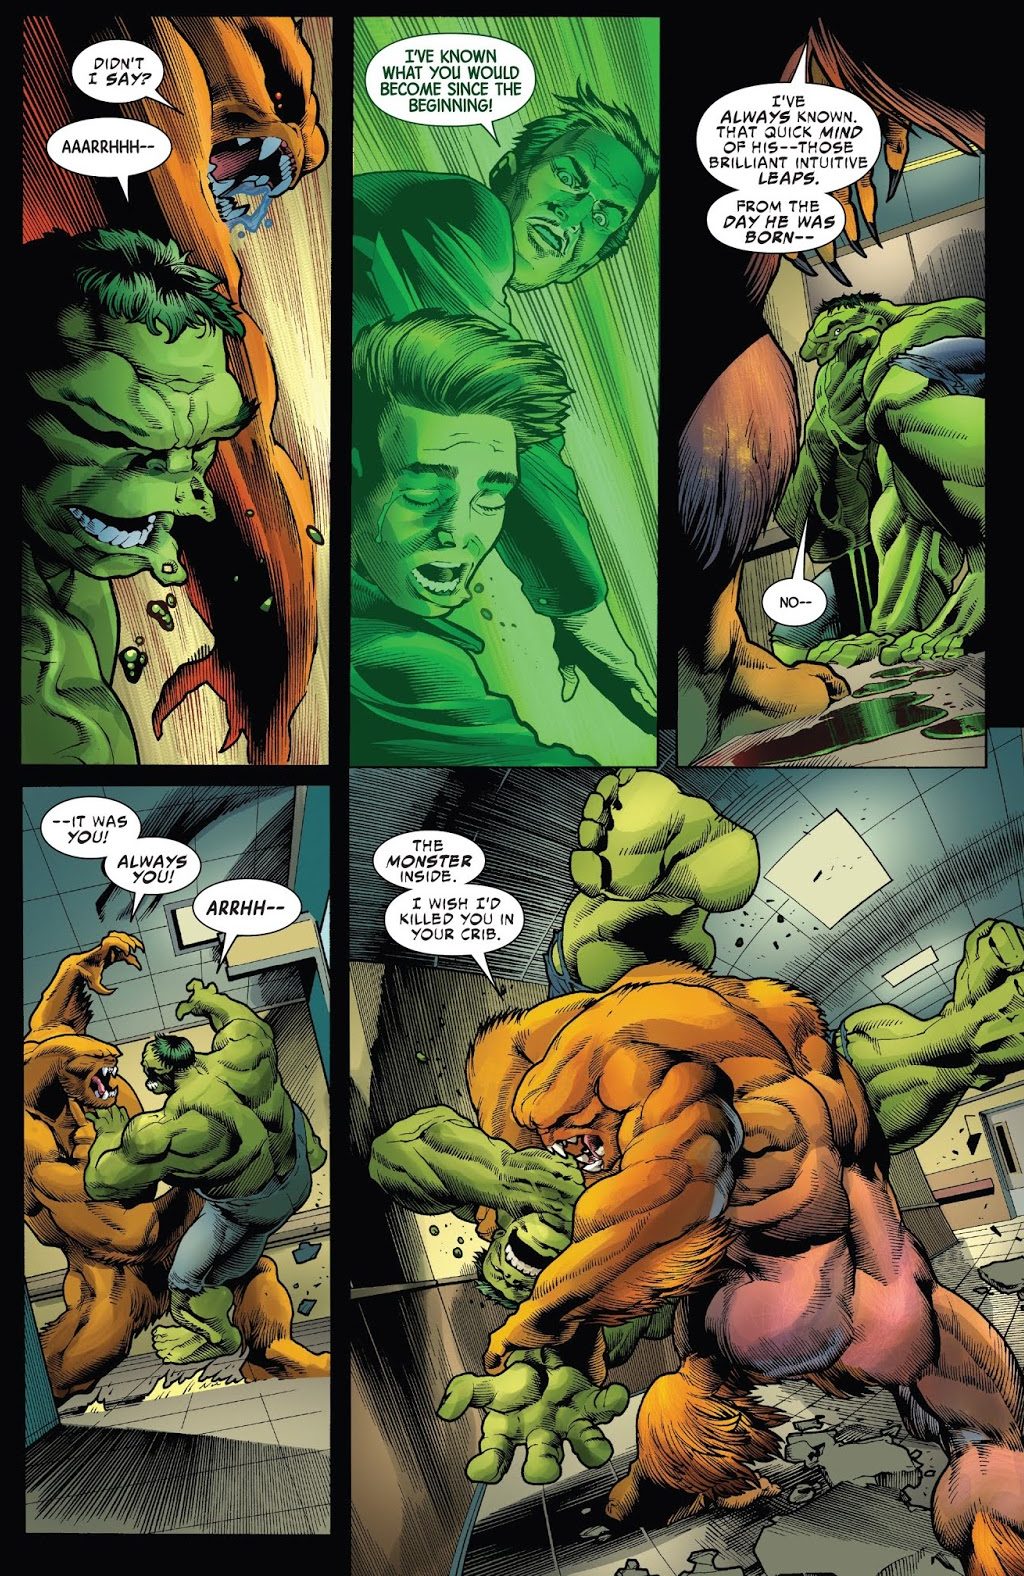 The Immortal Hulk VS Sasquatch